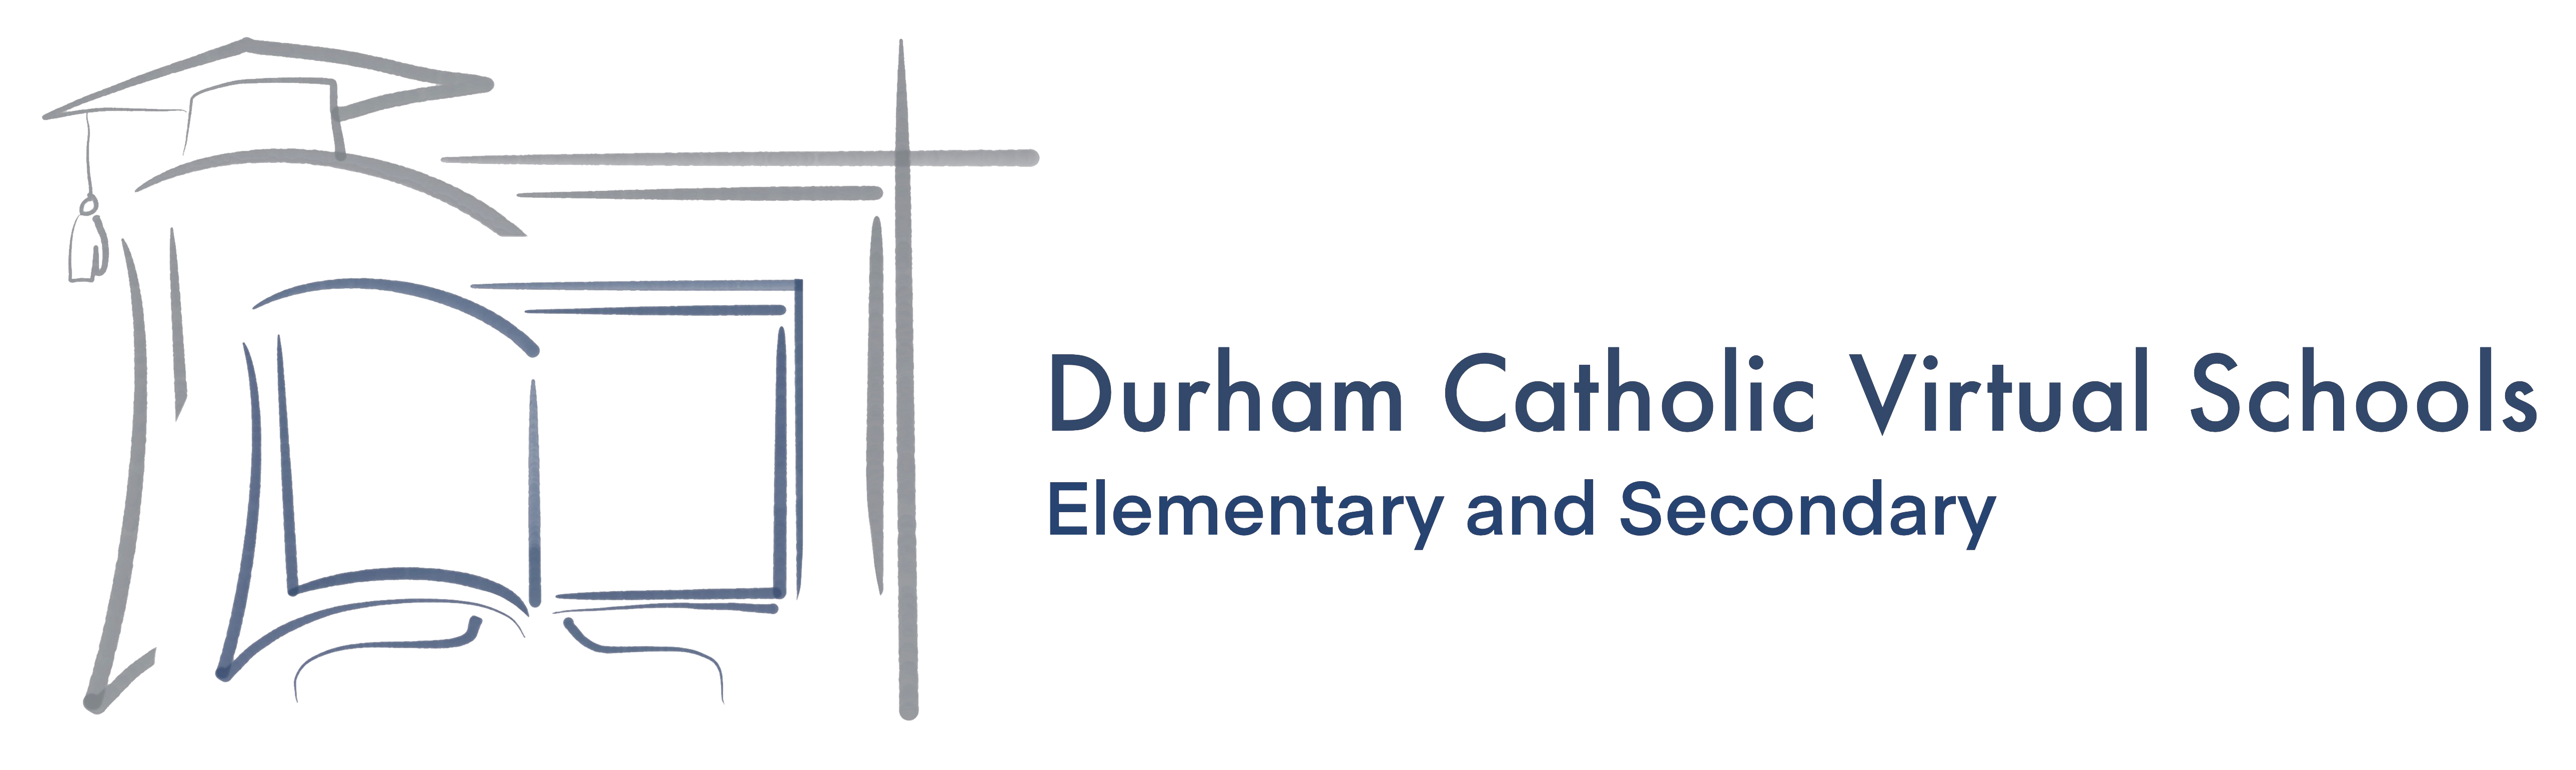 Durham Catholic Virtual Schools logo